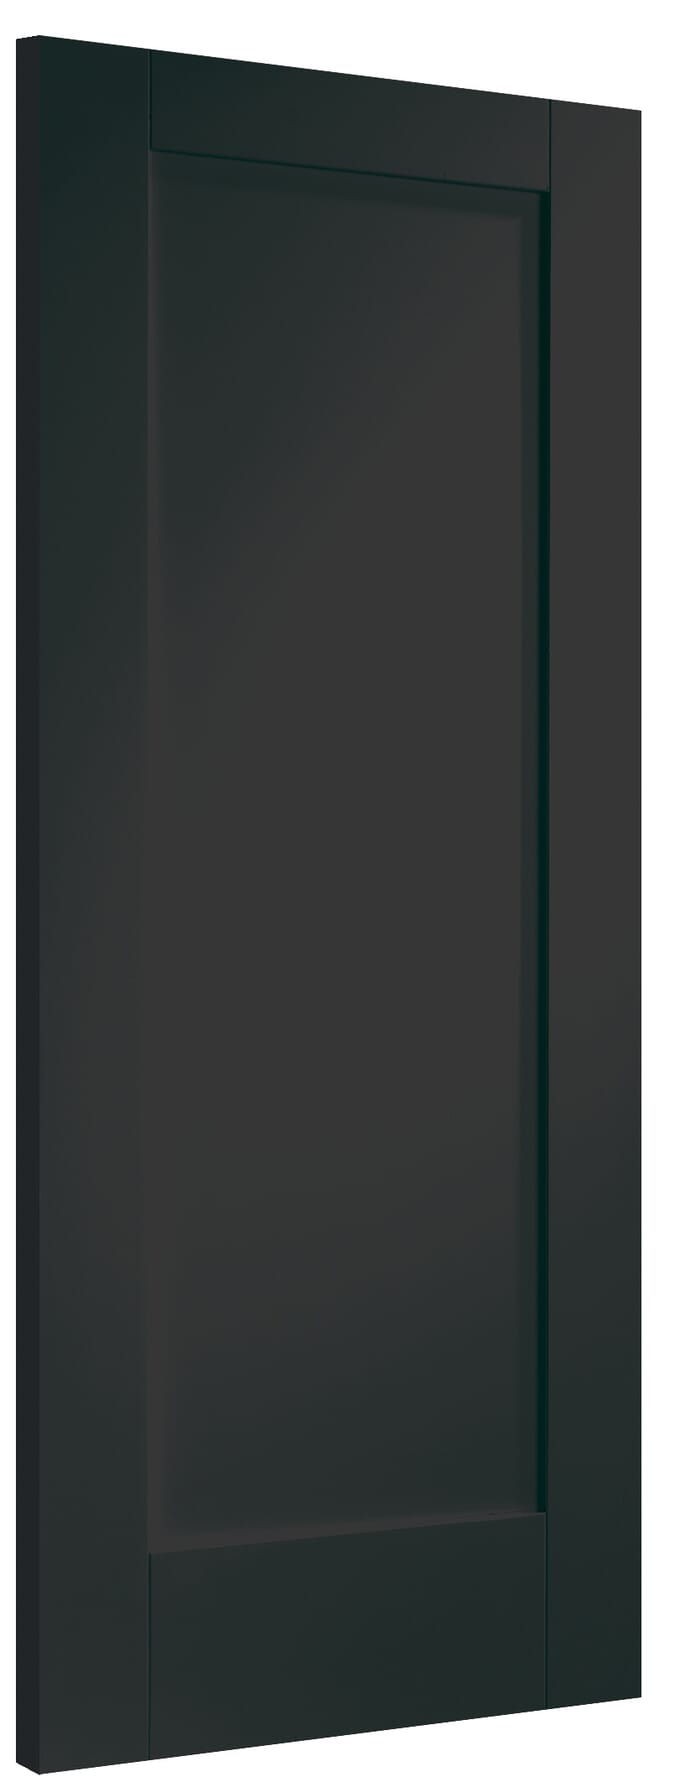 762x1981x44mm (30") Pattern 10 Cosmos Black Internal Doors